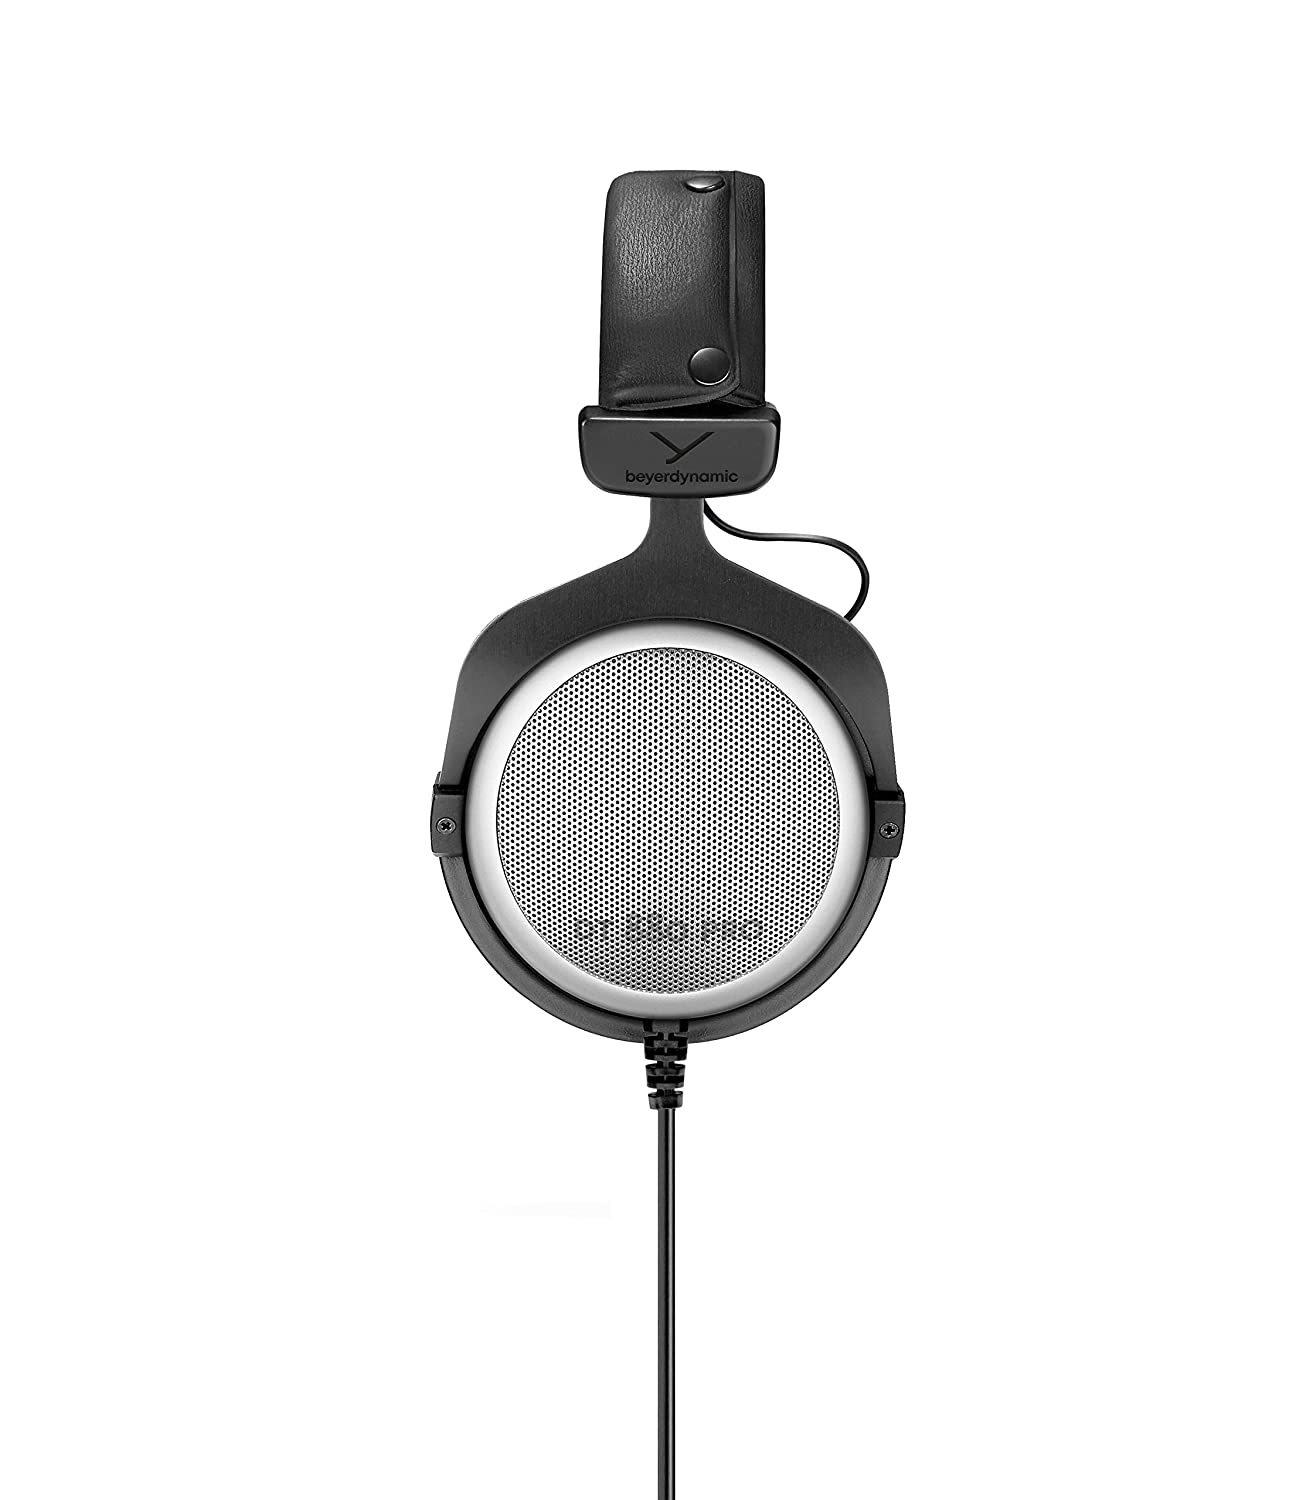 Beyerdynamic DT 880 Pro Over-Ear Studio Headphone